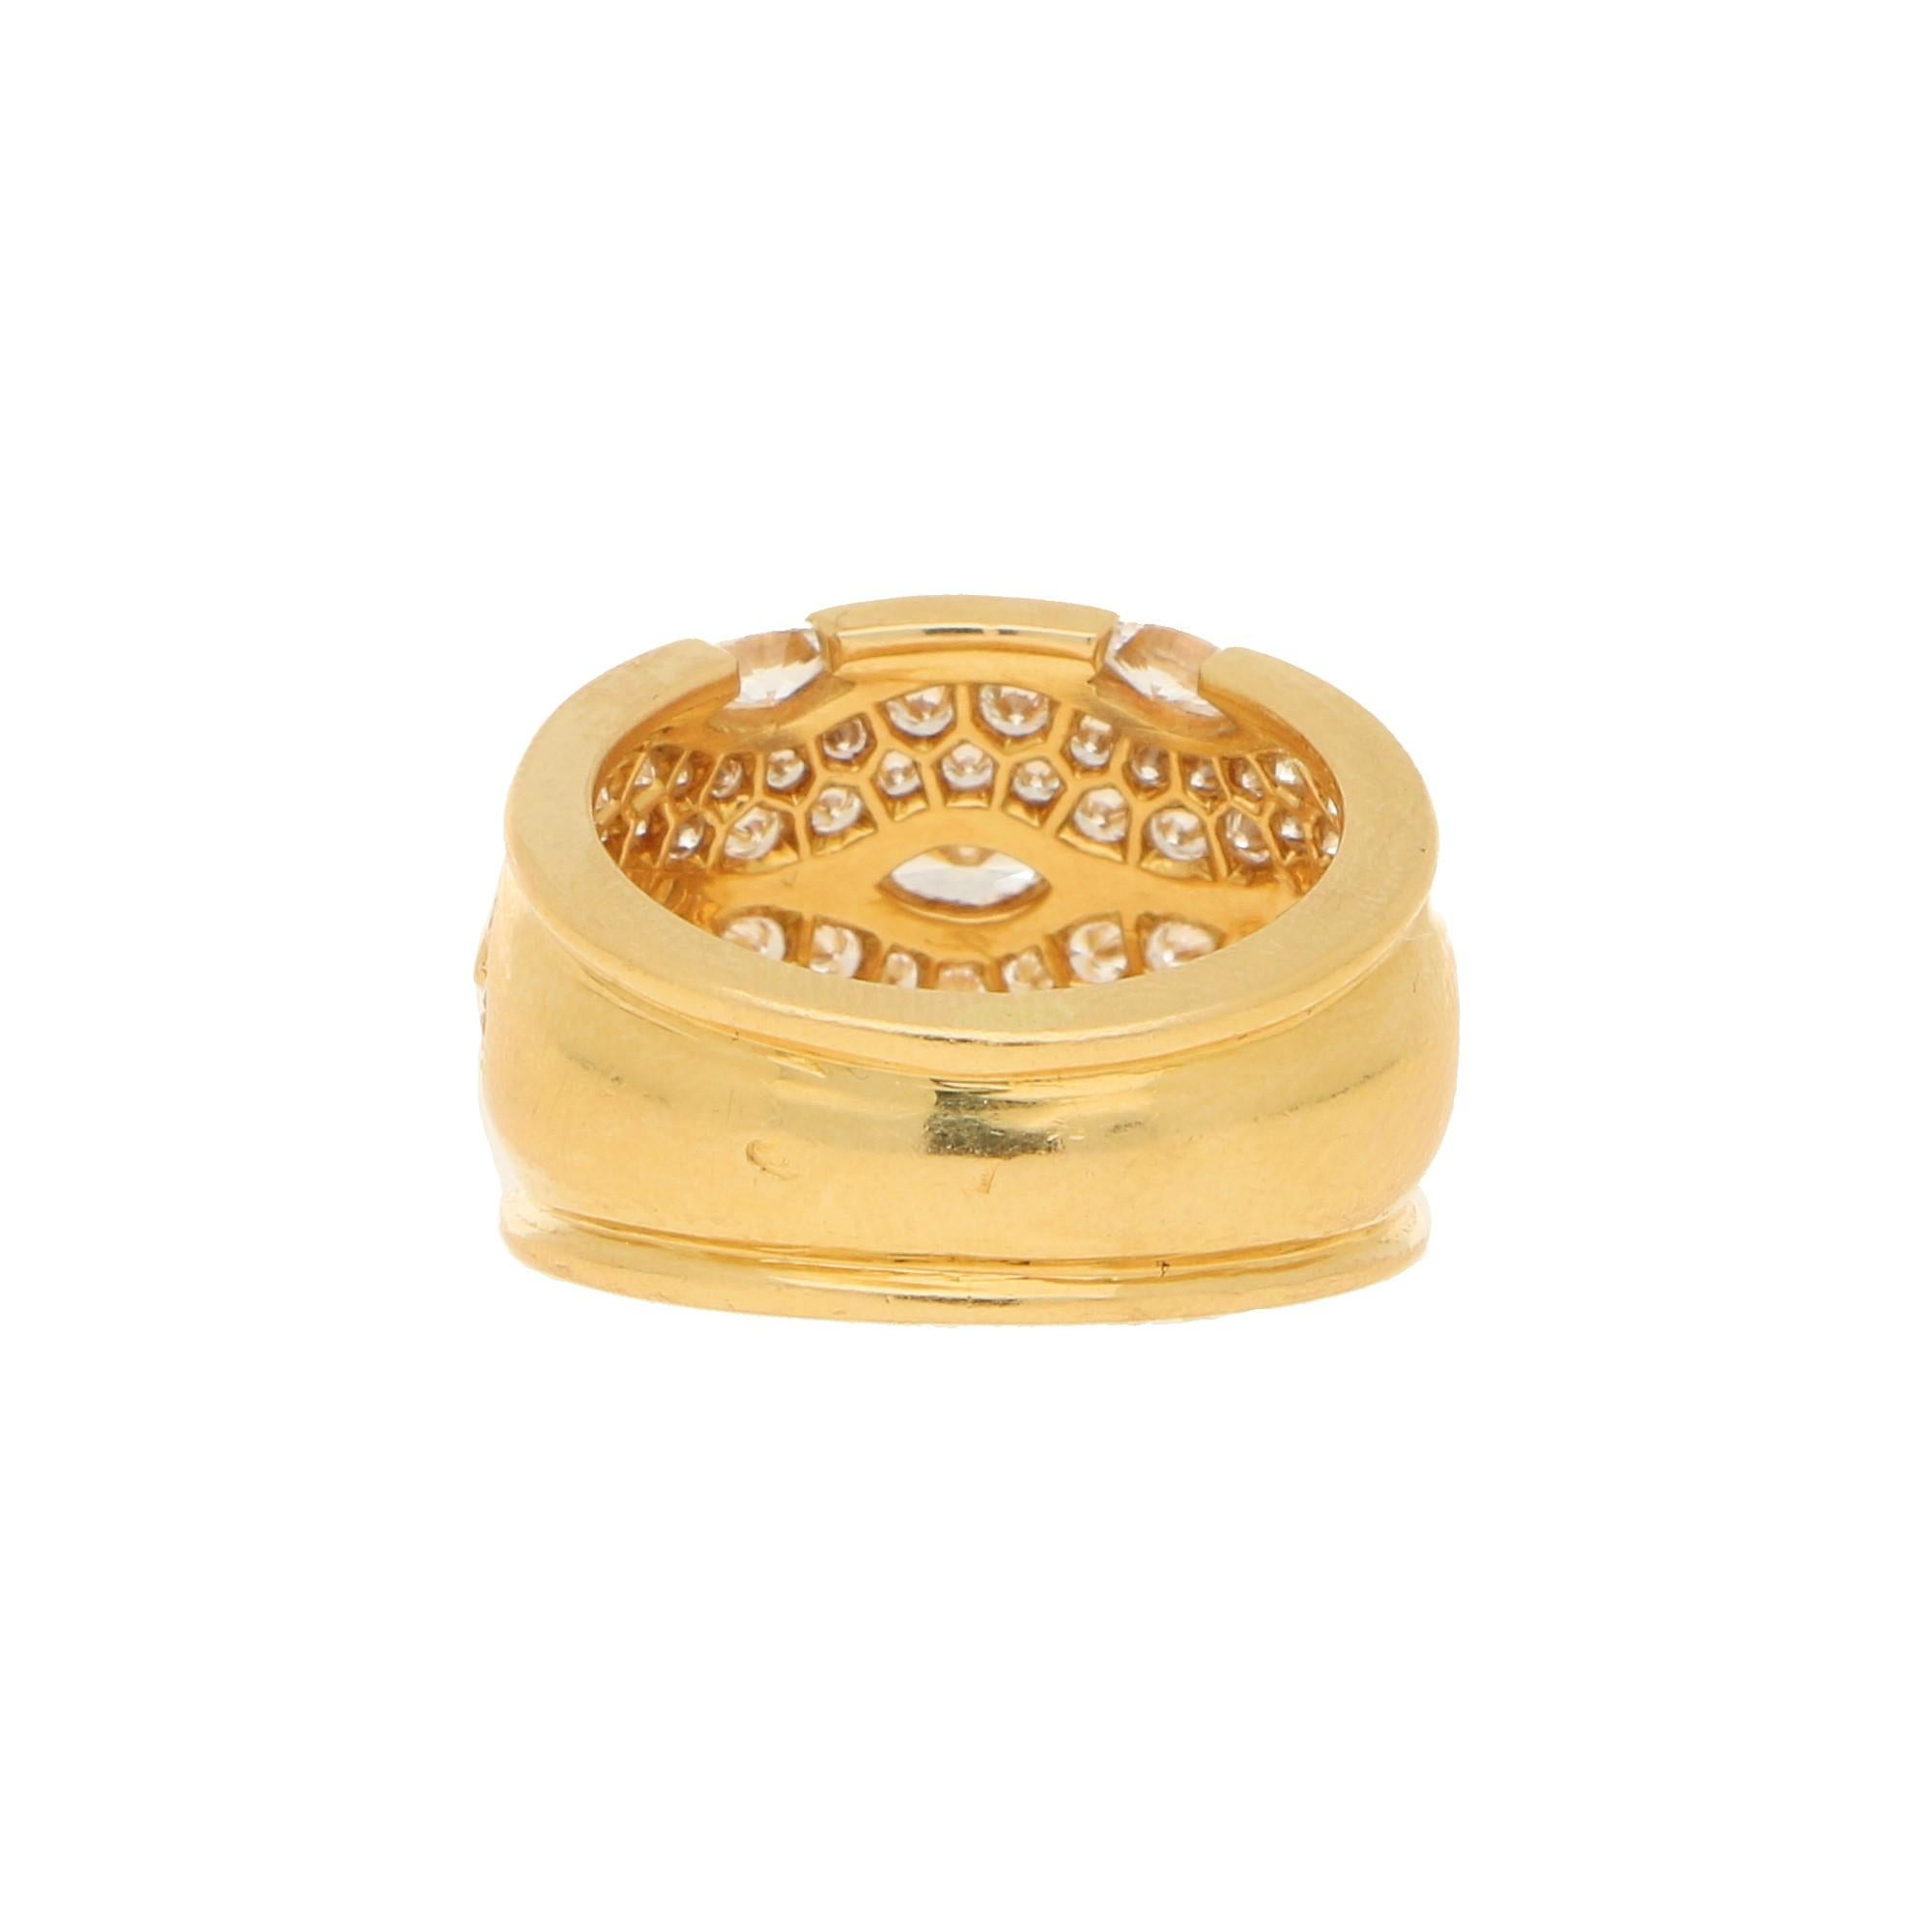 Round Cut Chaumet Paris Marquise Diamond Bombe Ring Set in 18k Yellow Gold